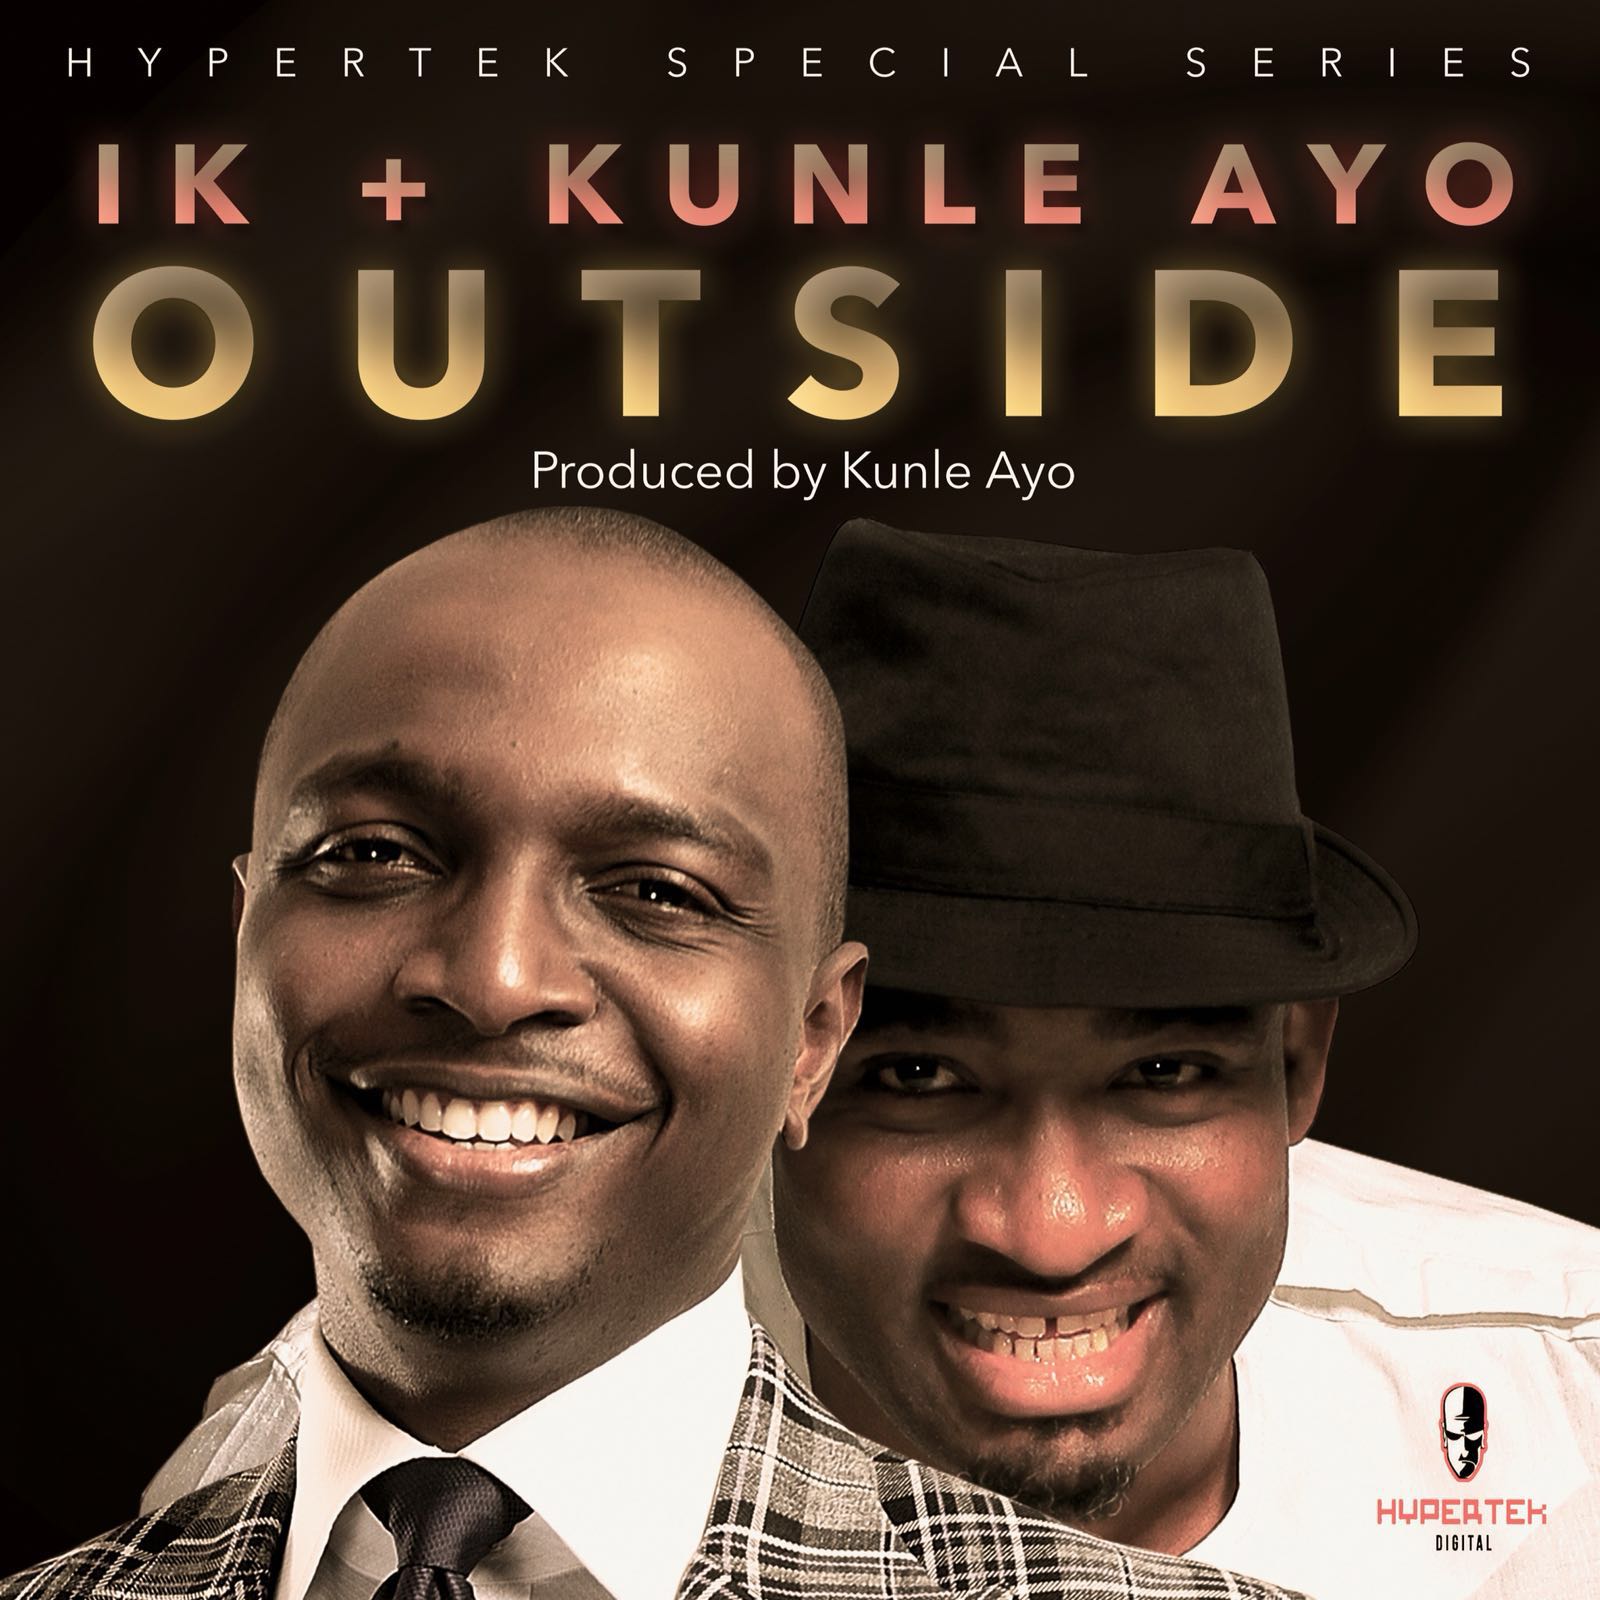 IK Osakioduwa & Kunle Ayo - OUTSIDE (a 2face Idibia Ballad) Artwork | AceWorldTeam.com